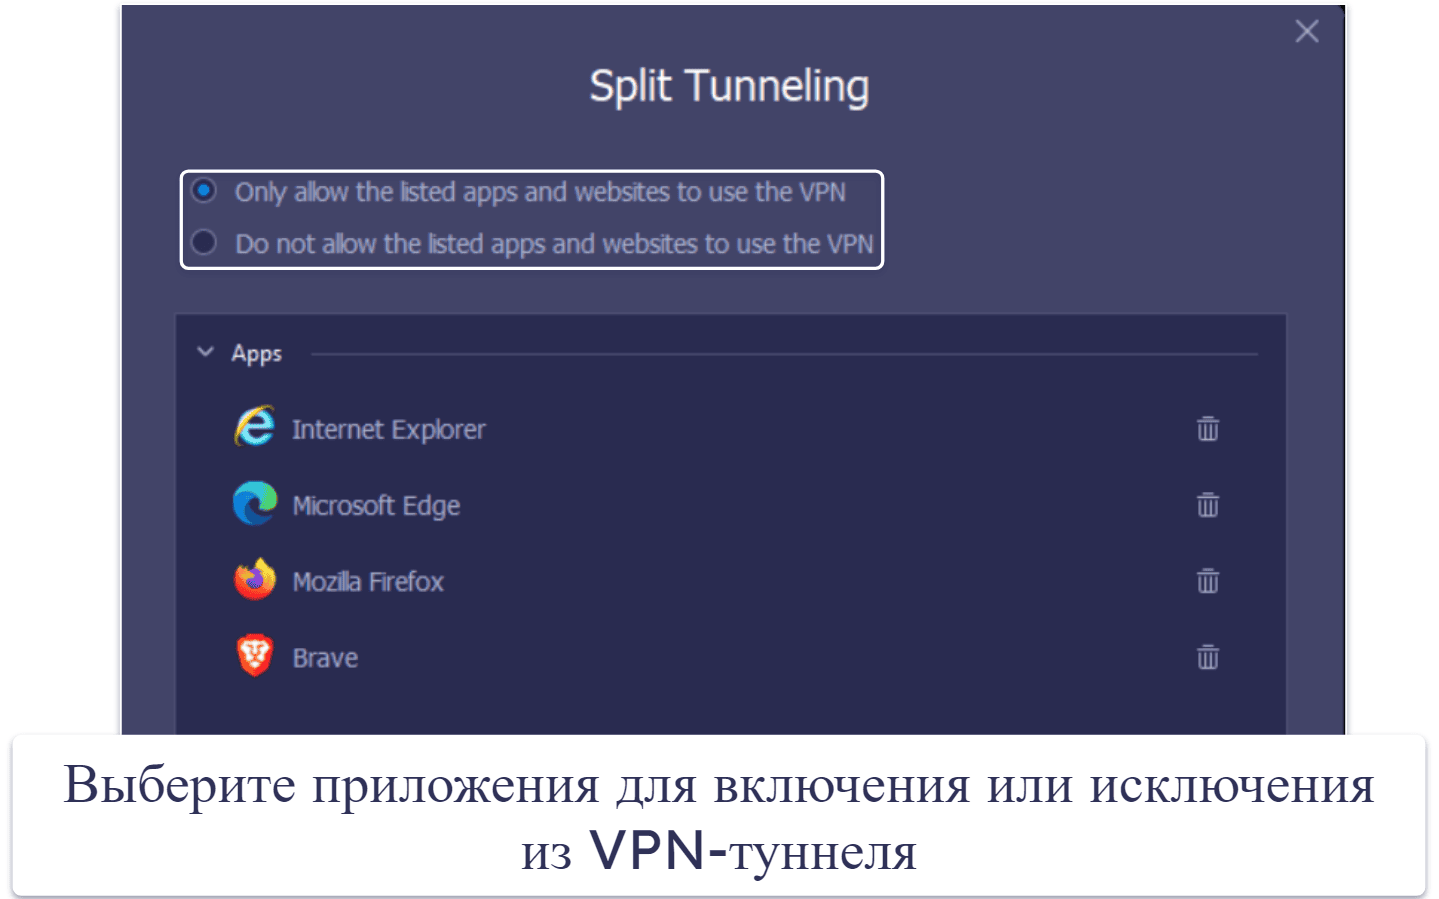 Полный обзор iTop VPN